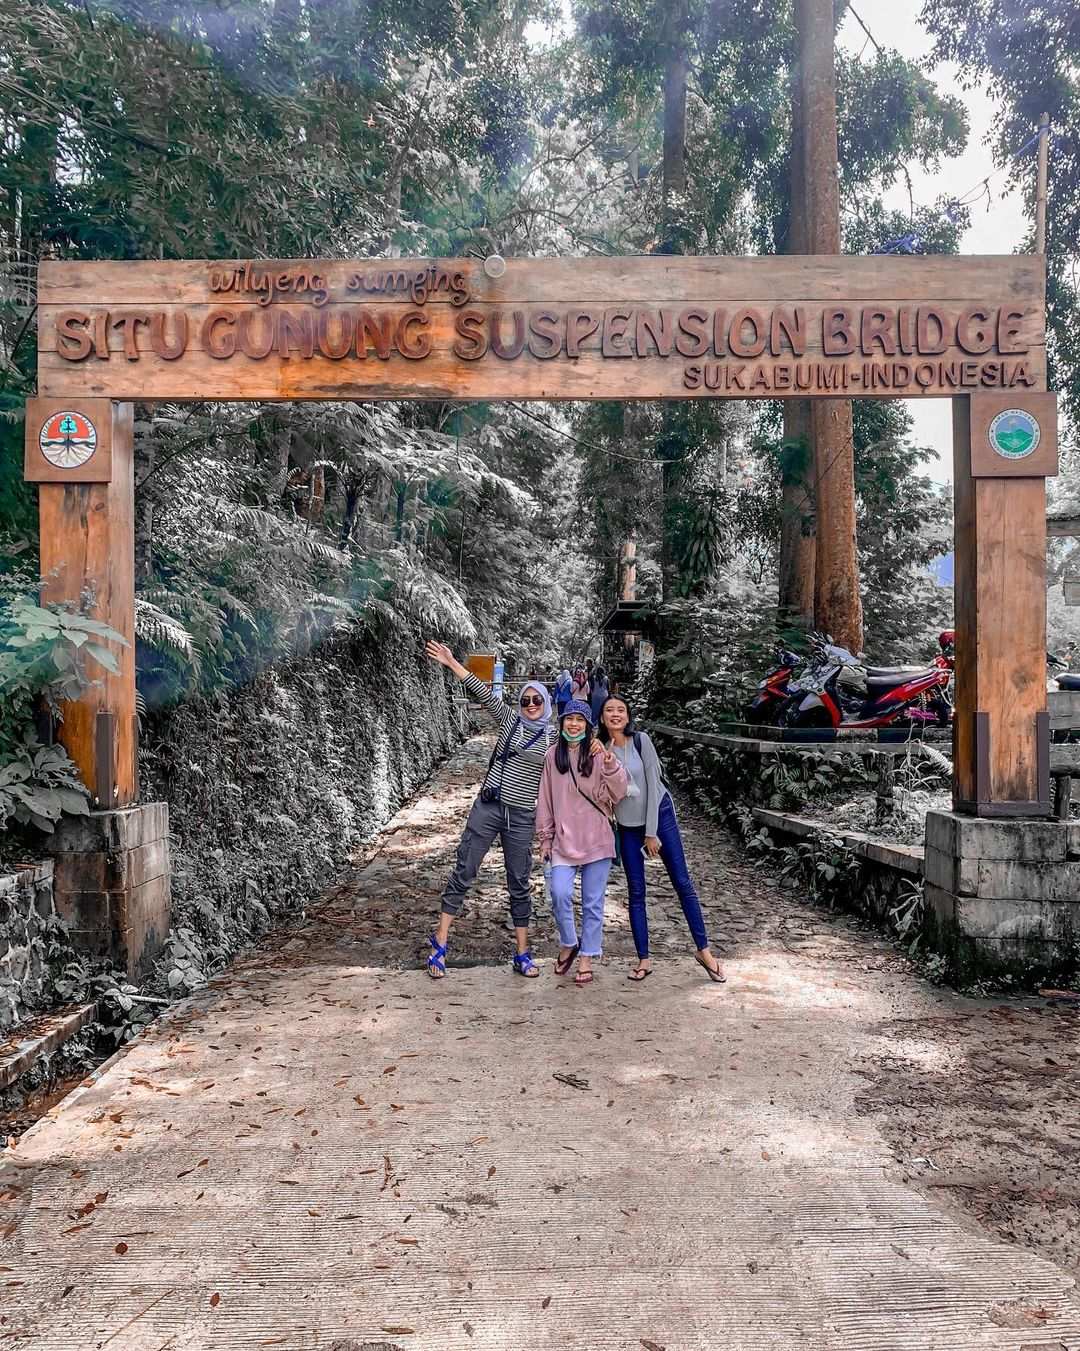 Berfoto Di Gapura Situ Gunung Suspension Bridge Sukabumi Image From @theprameswari